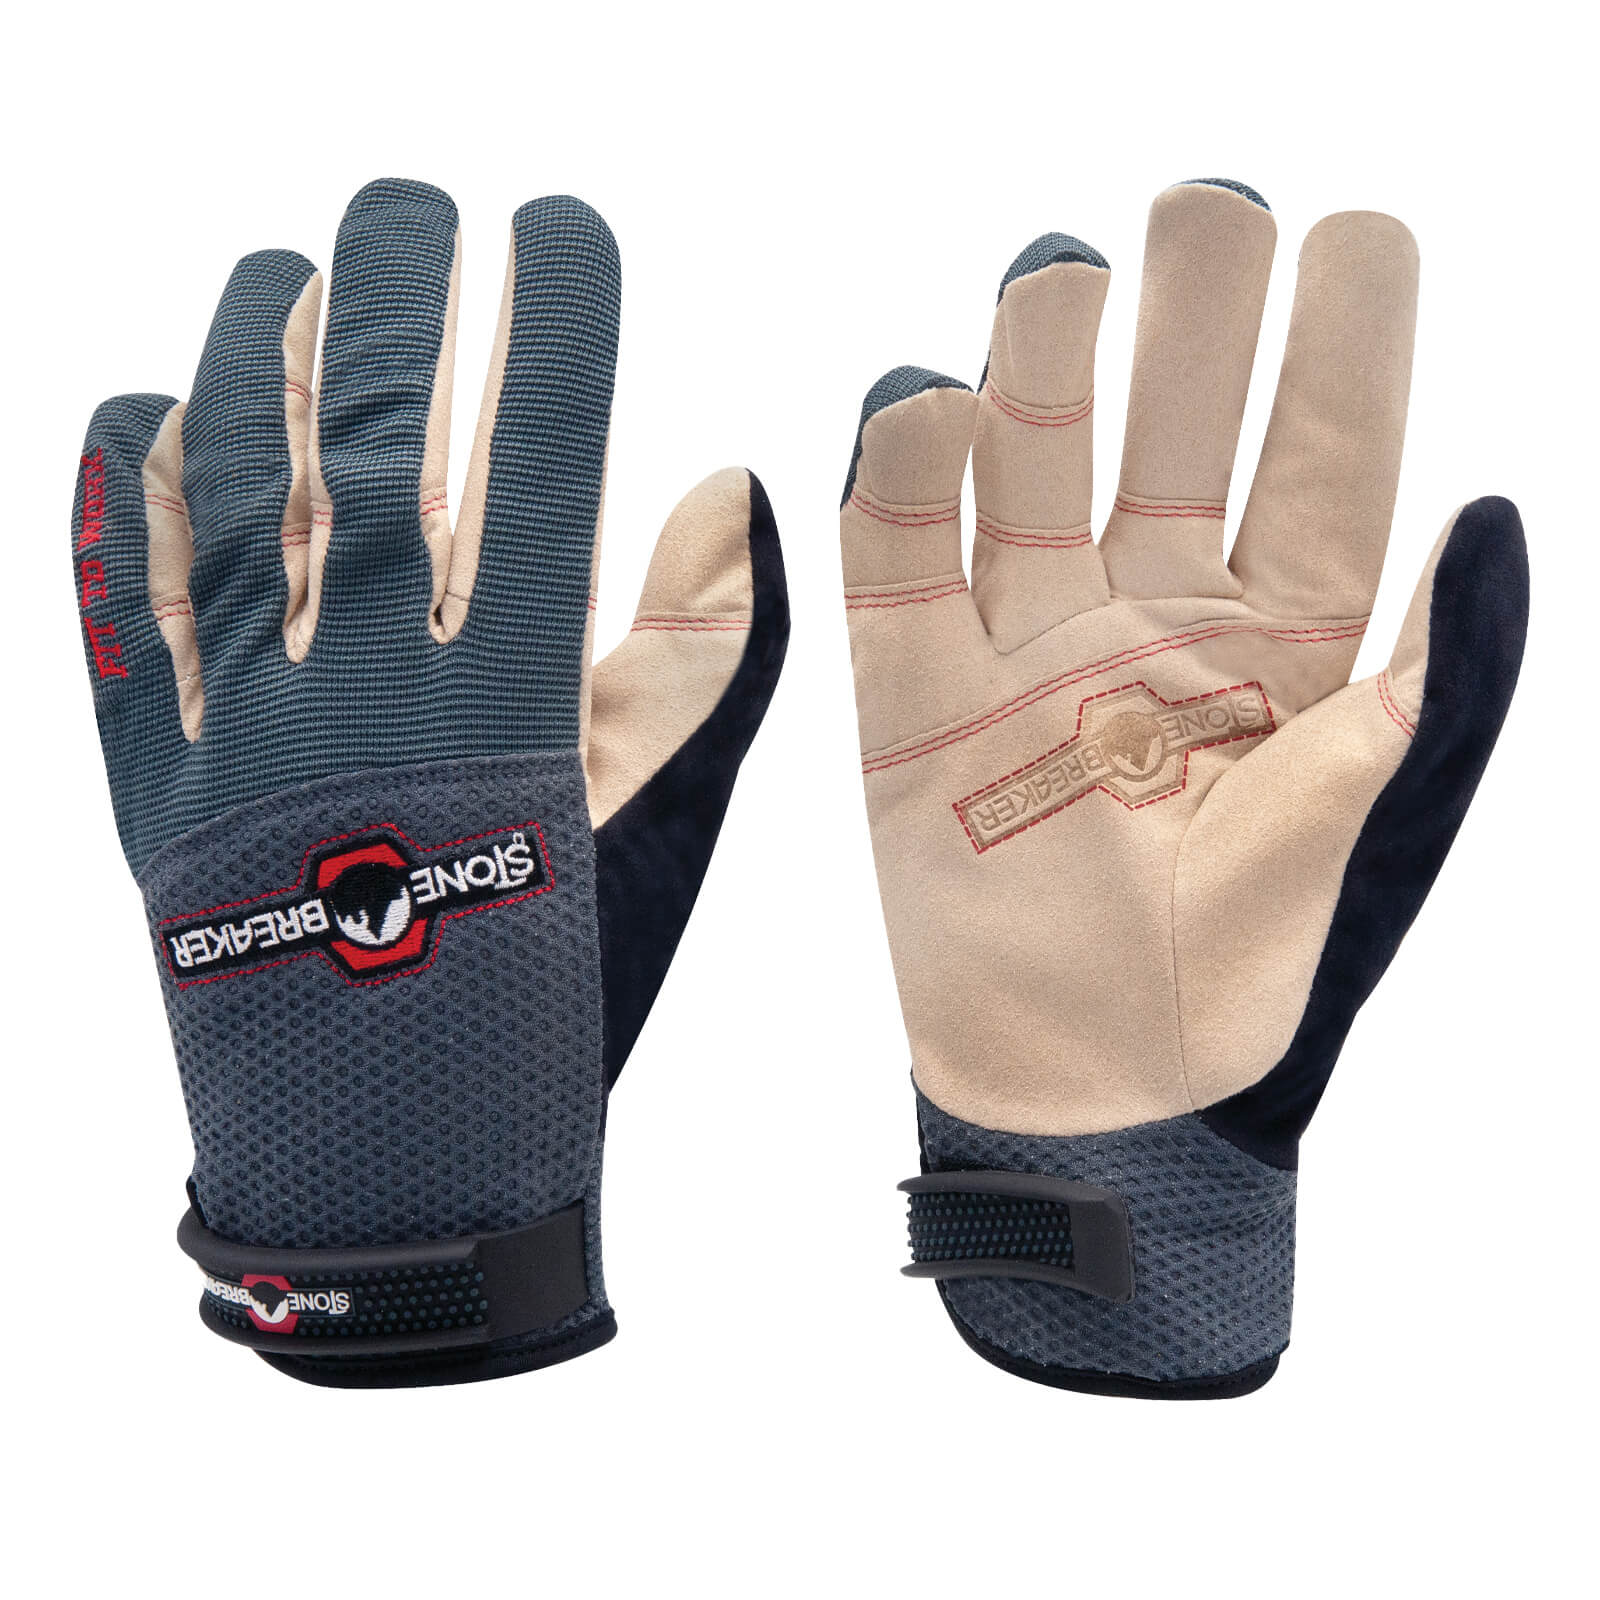 StoneBreaker Nailbender Trades Work Gloves - Medium - Charcoal